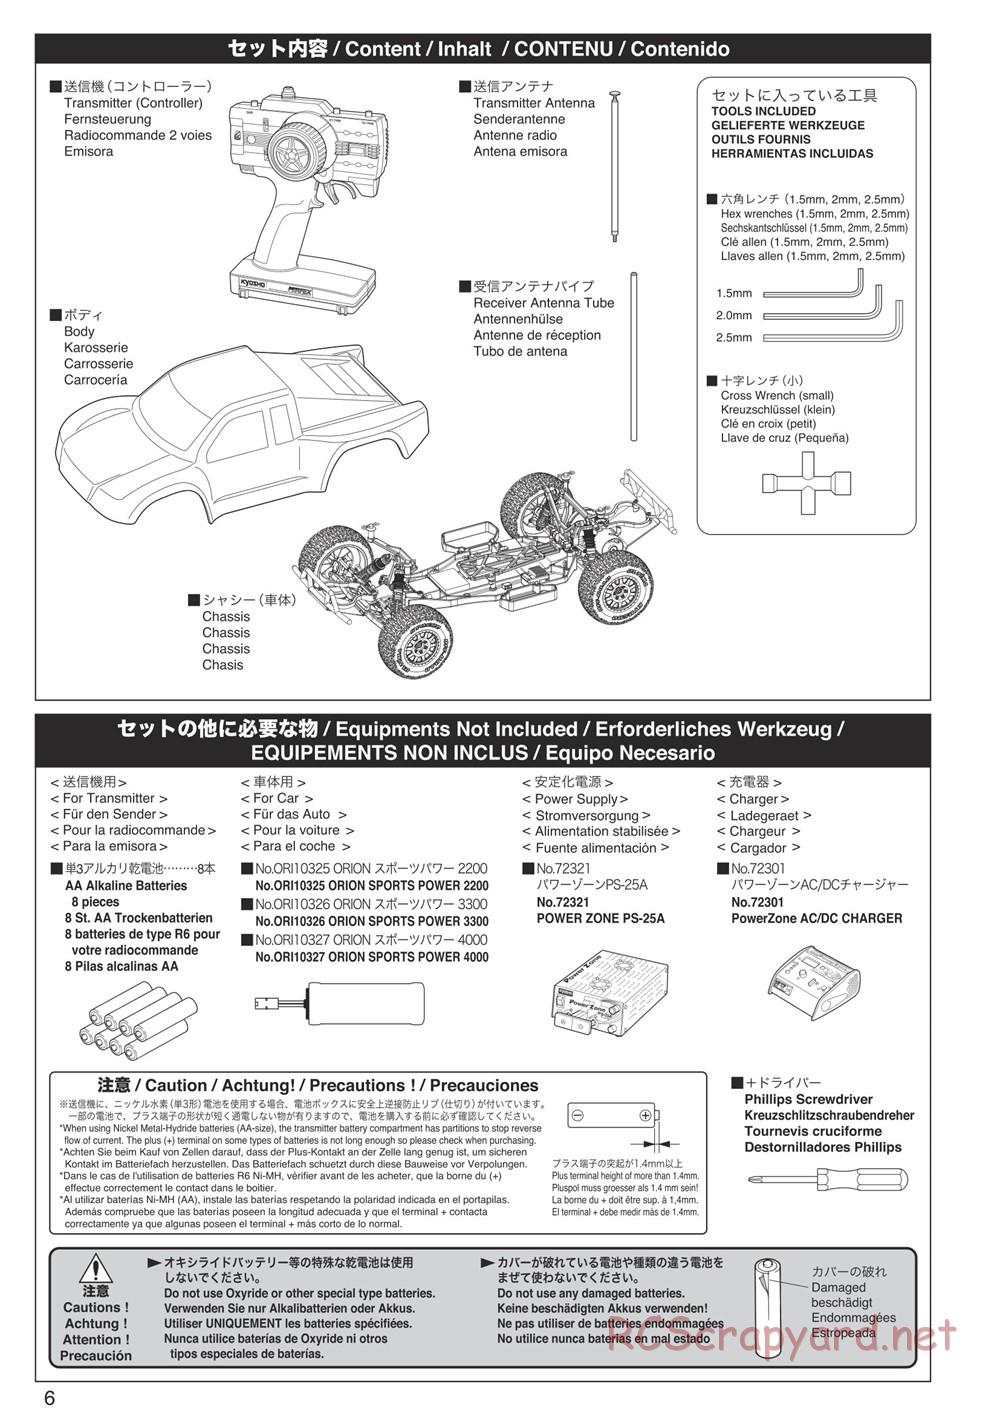 Kyosho - Ultima-SC - Manual - Page 6